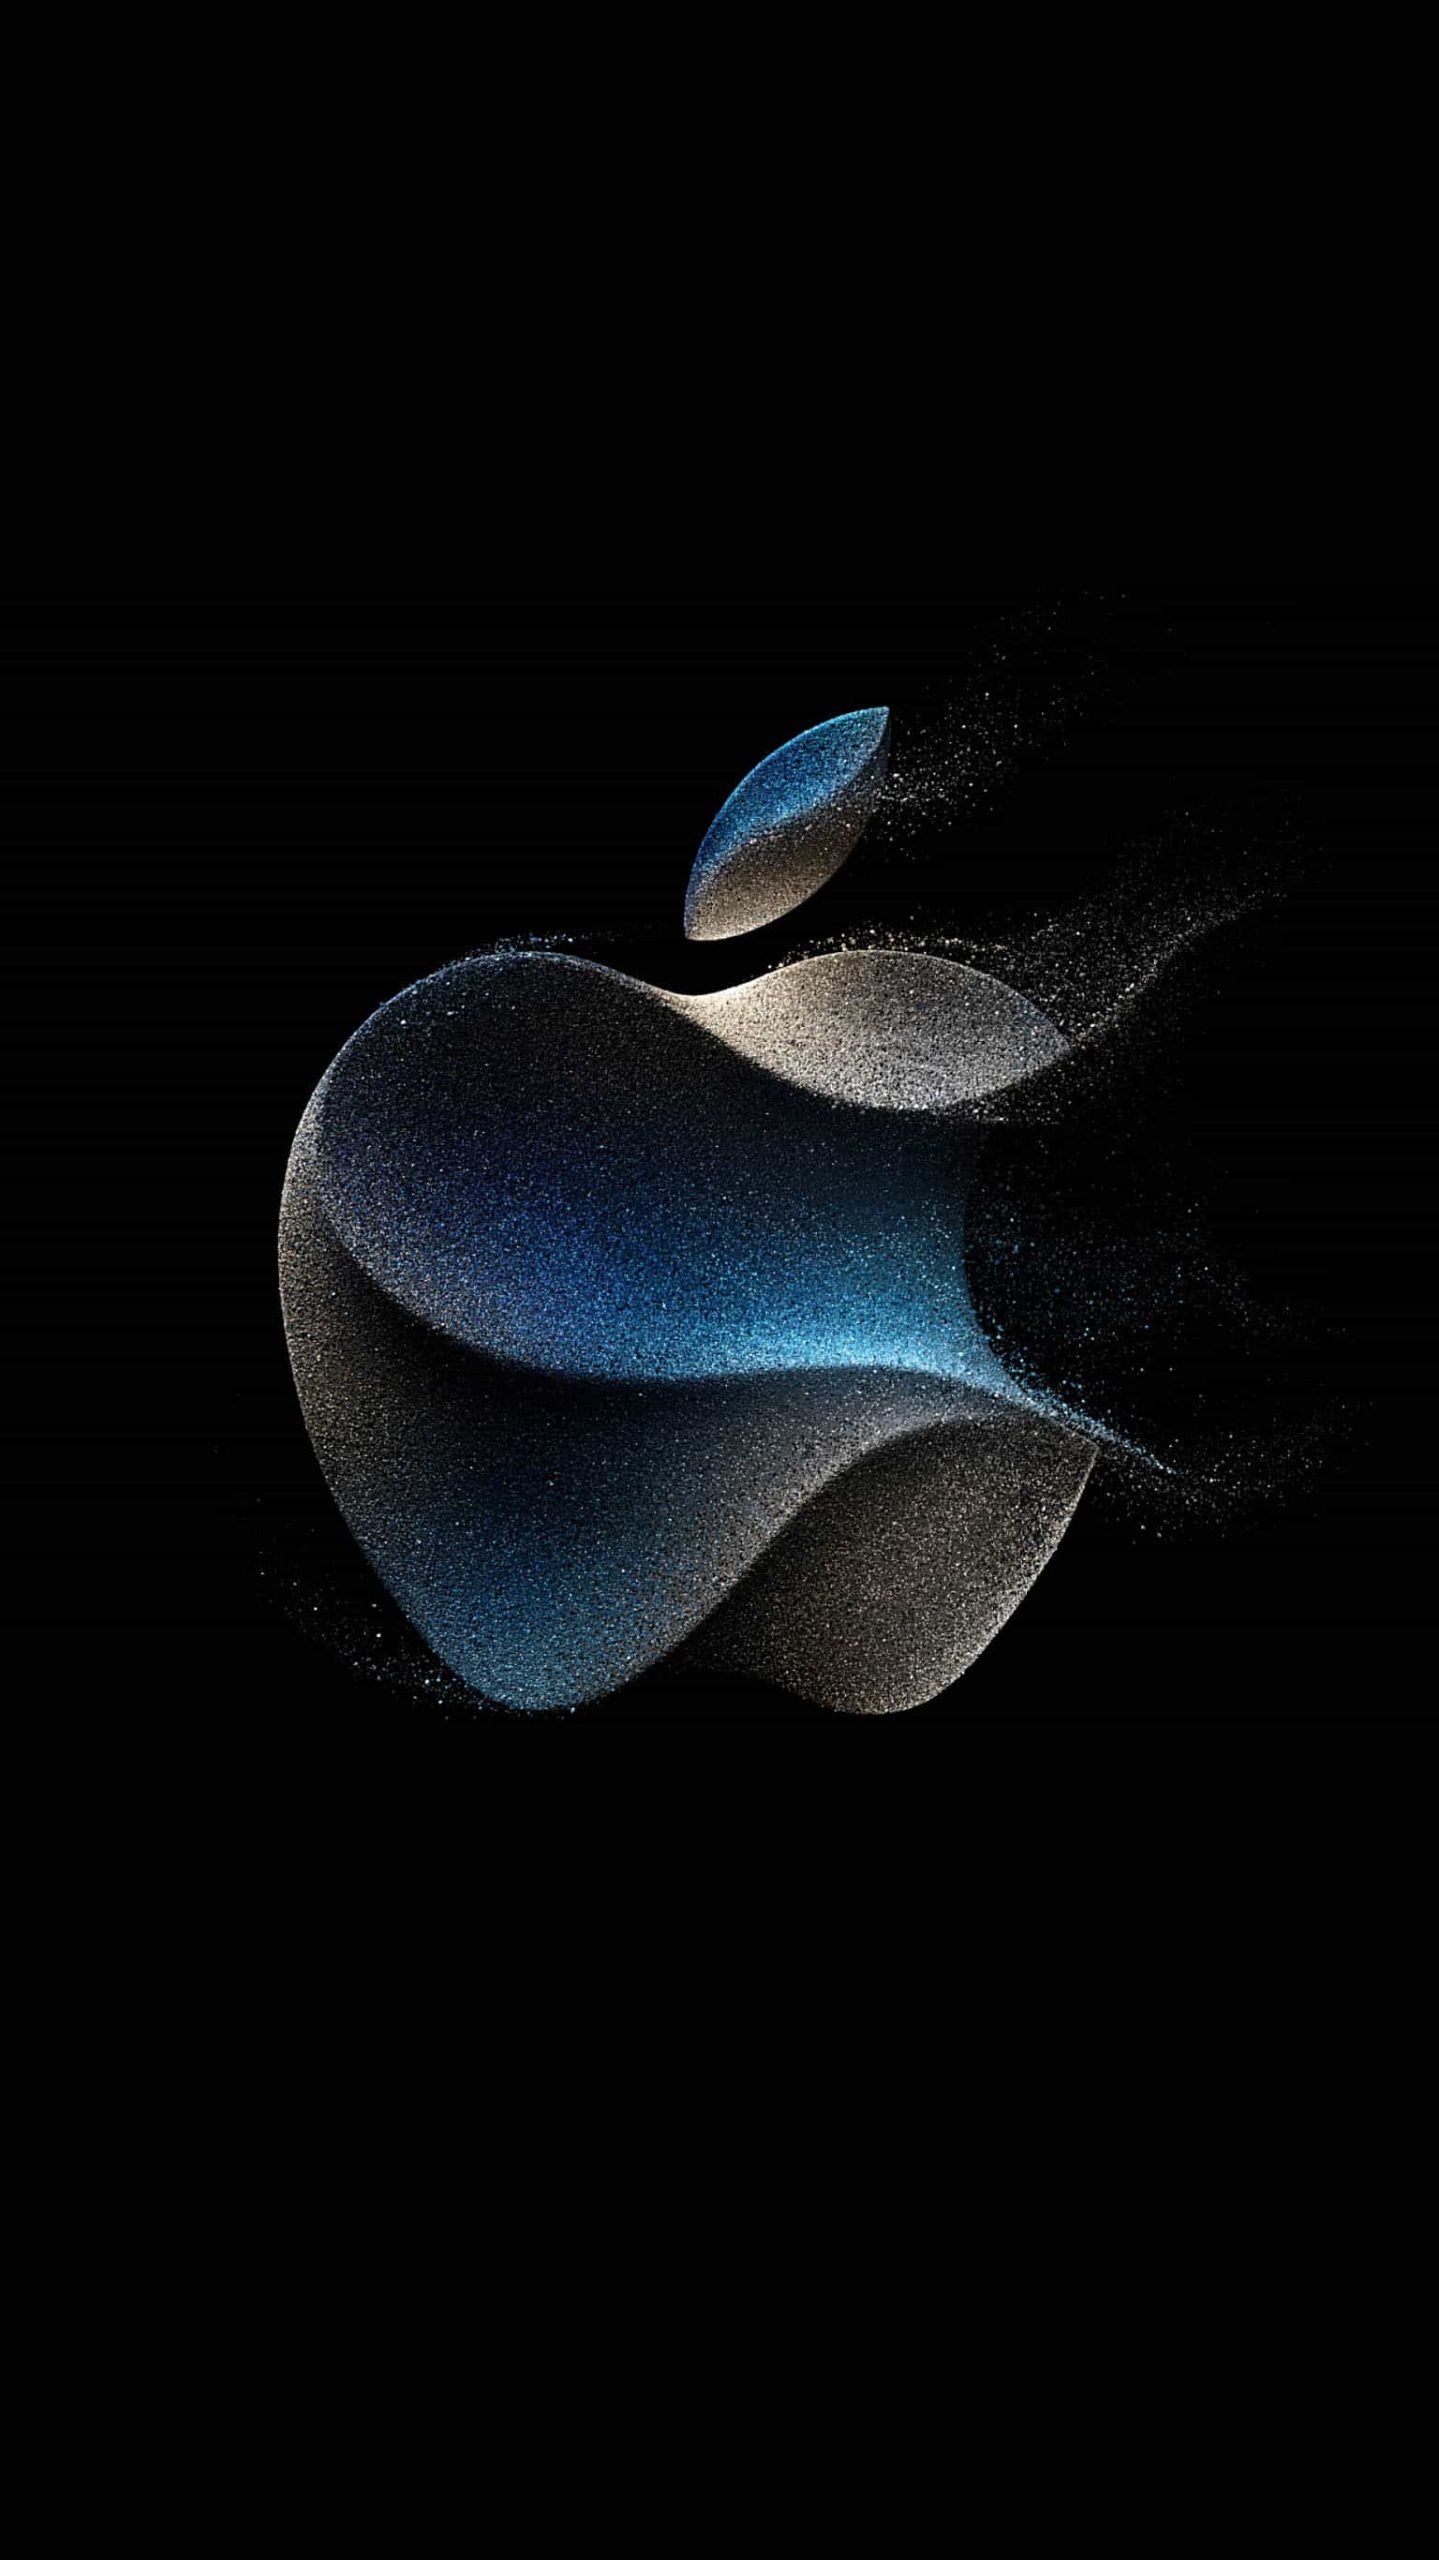 Apple Event 2023